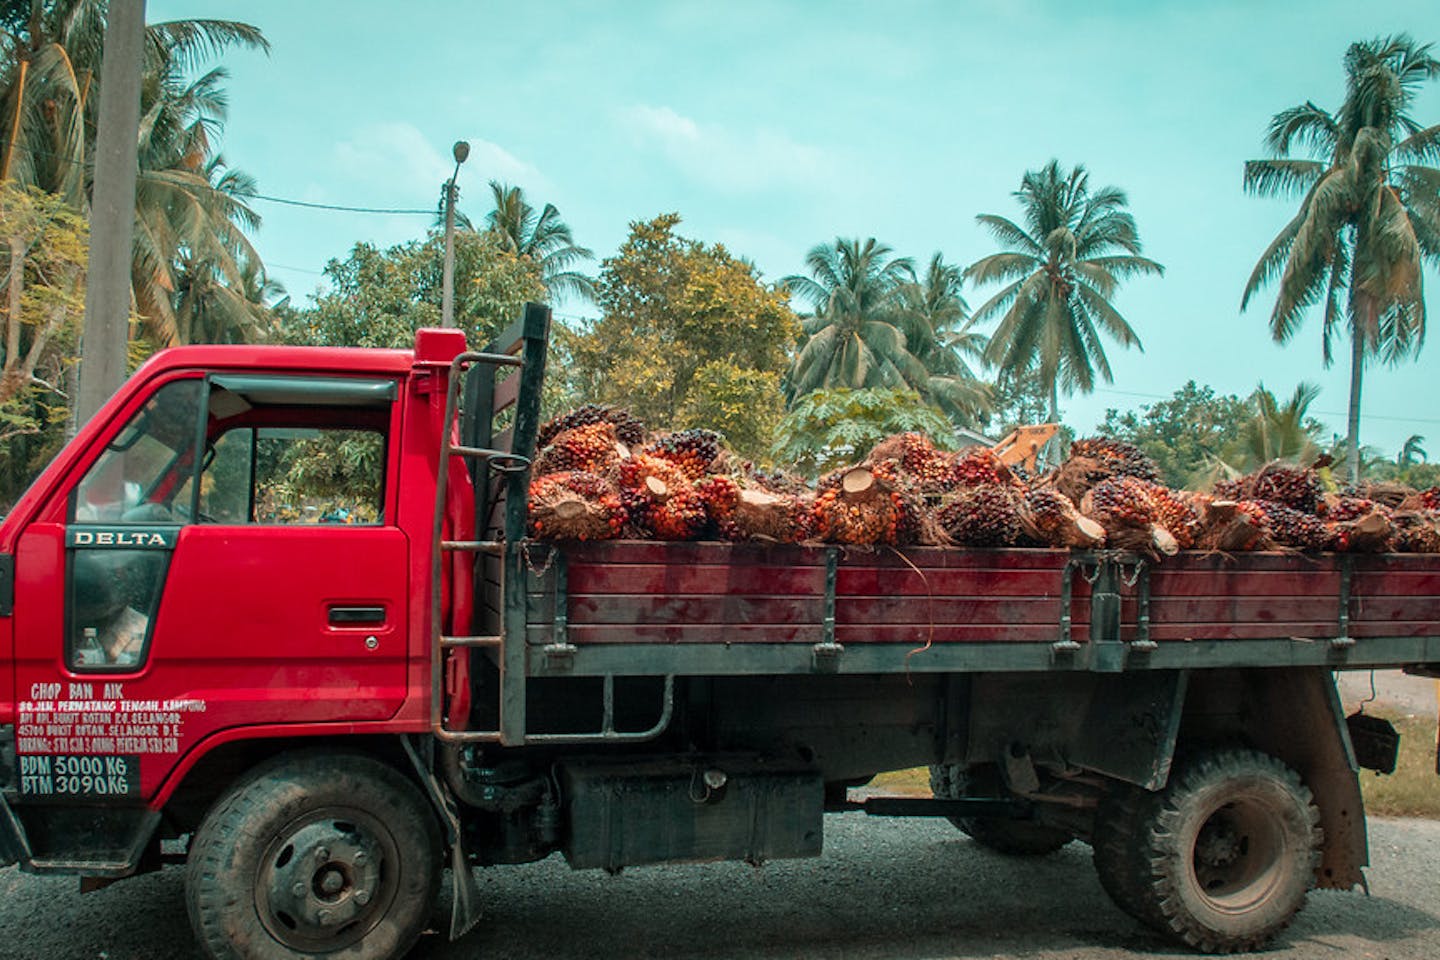 palm oil selangor malaysia